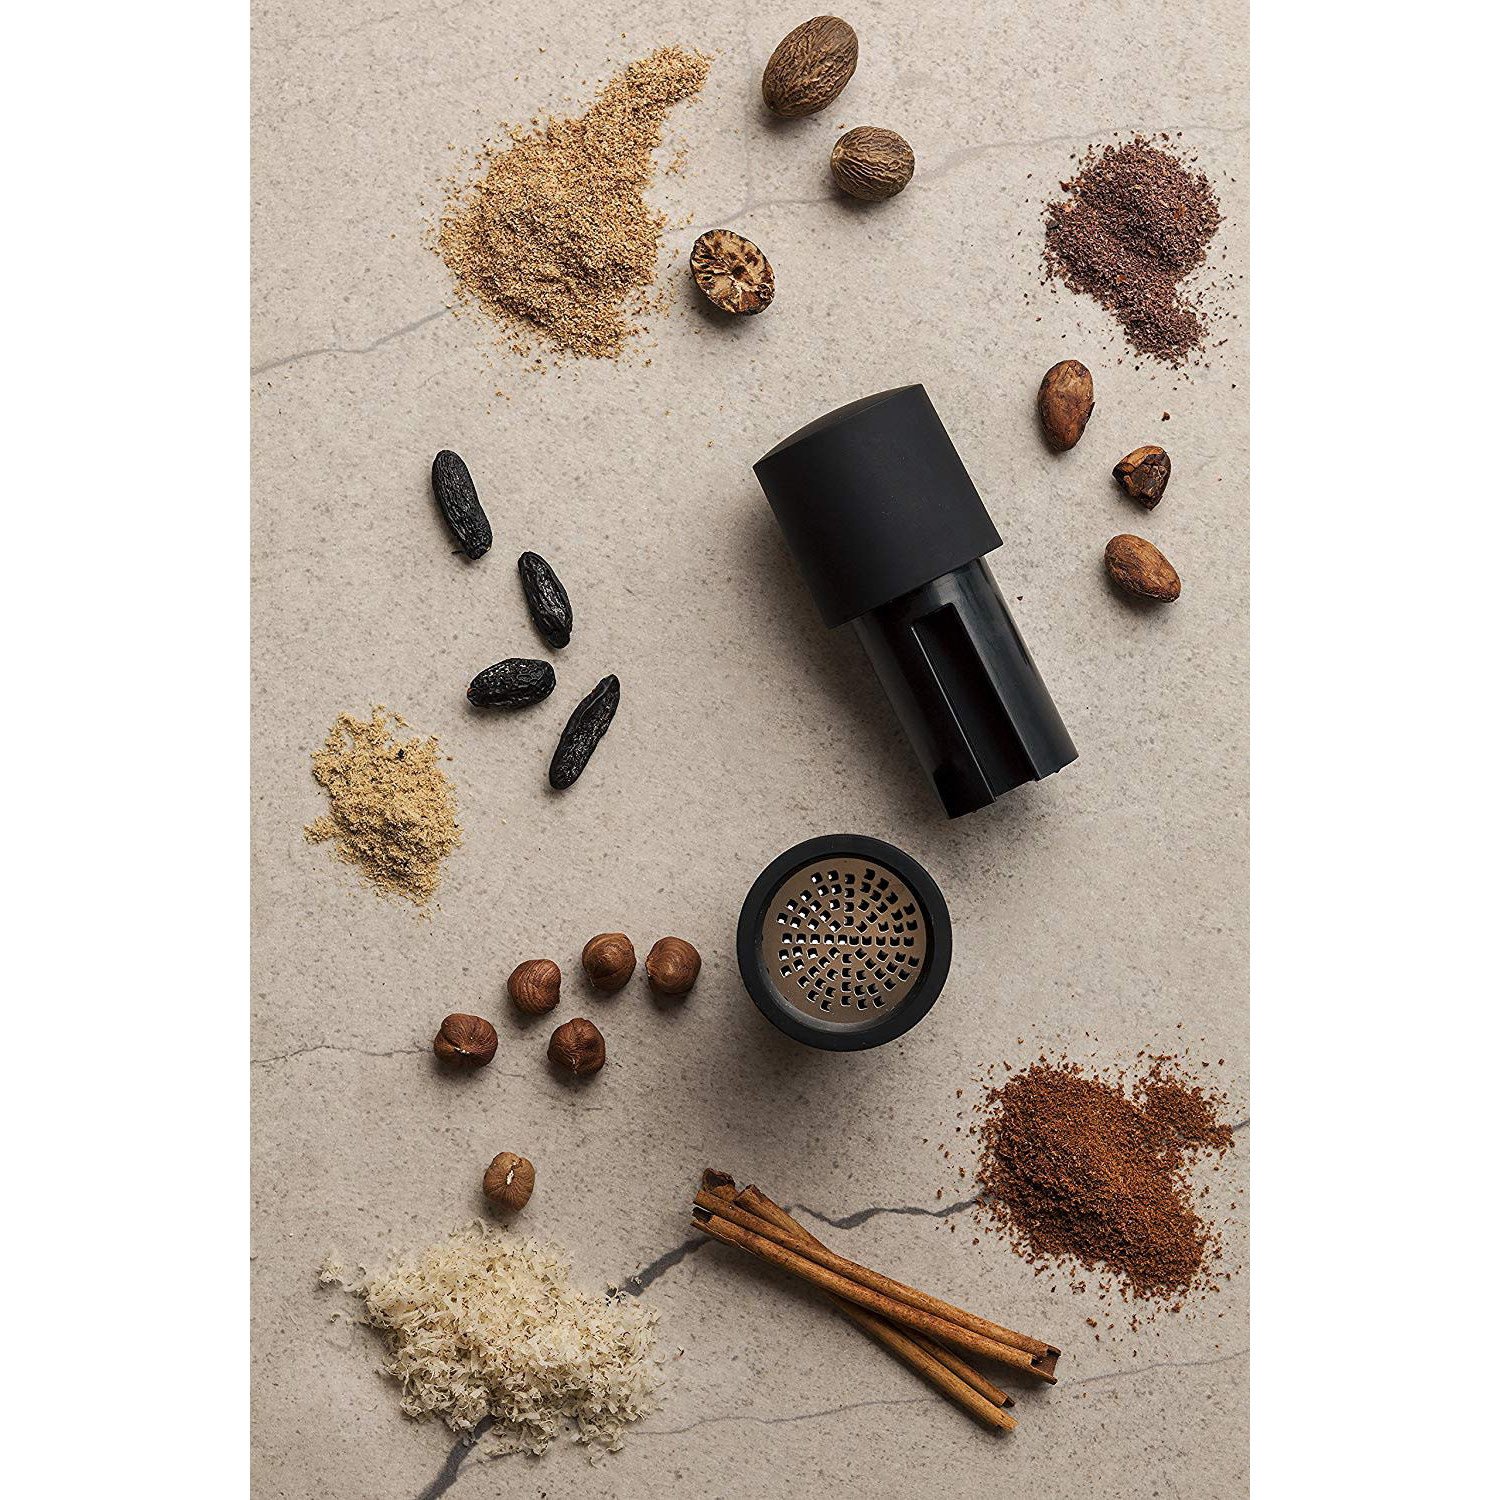 Handheld Spice Mill and Herb Grinder – The Convenient Kitchen